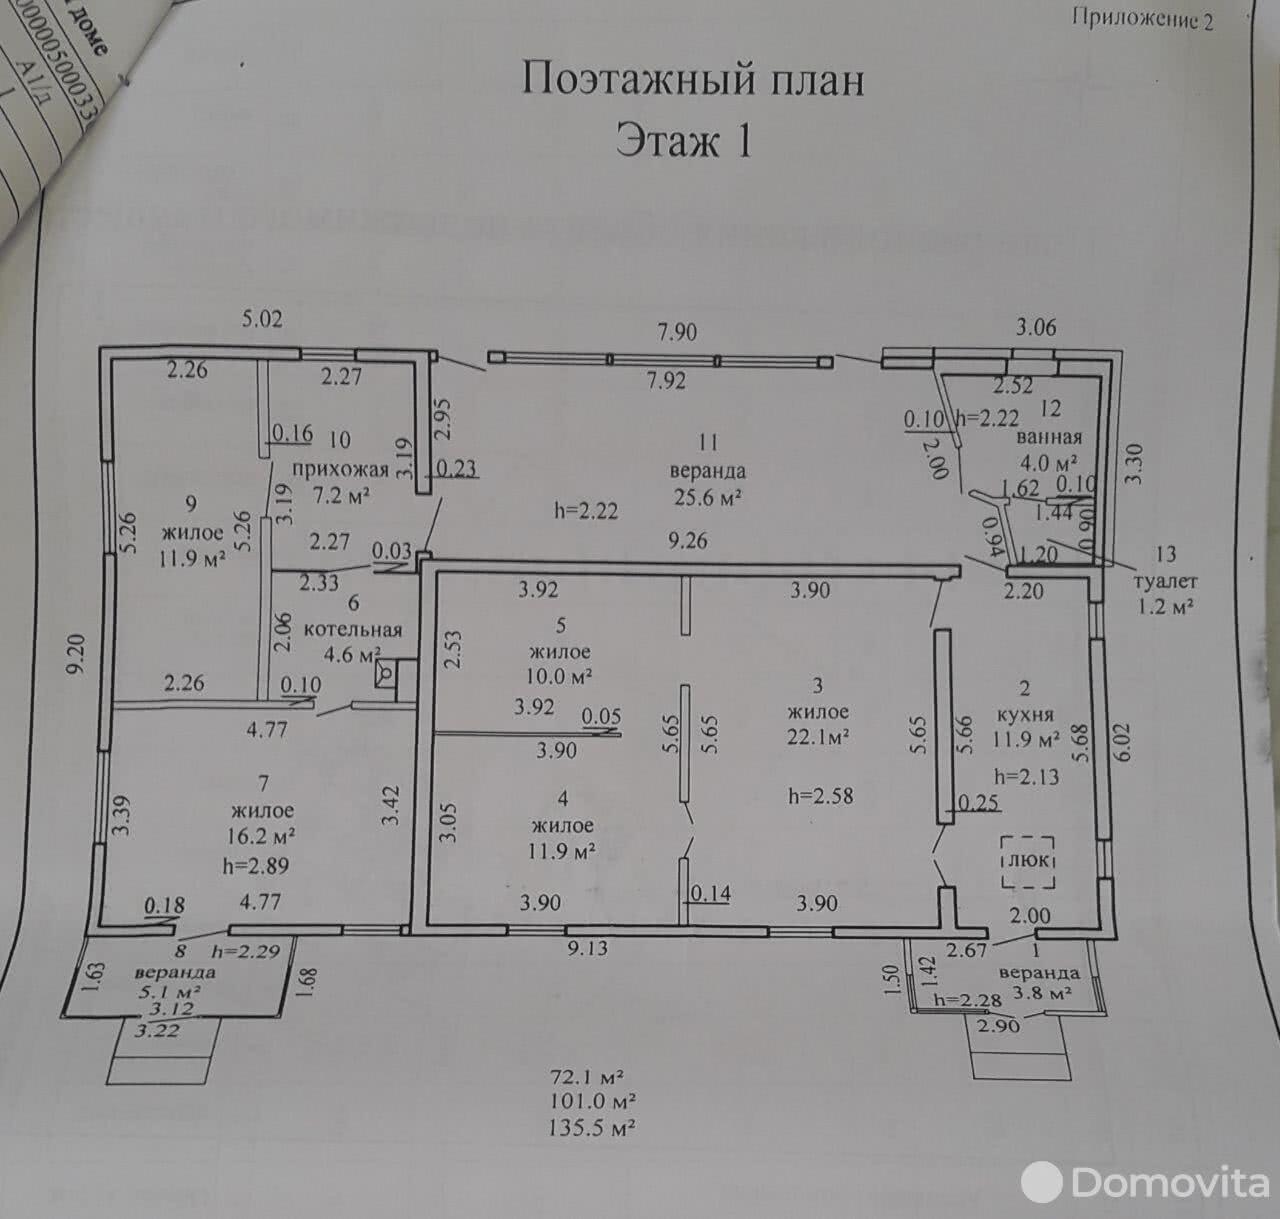 дом, Барановичи, ул. Тургенева, д. 17, стоимость продажи 95 629 р.